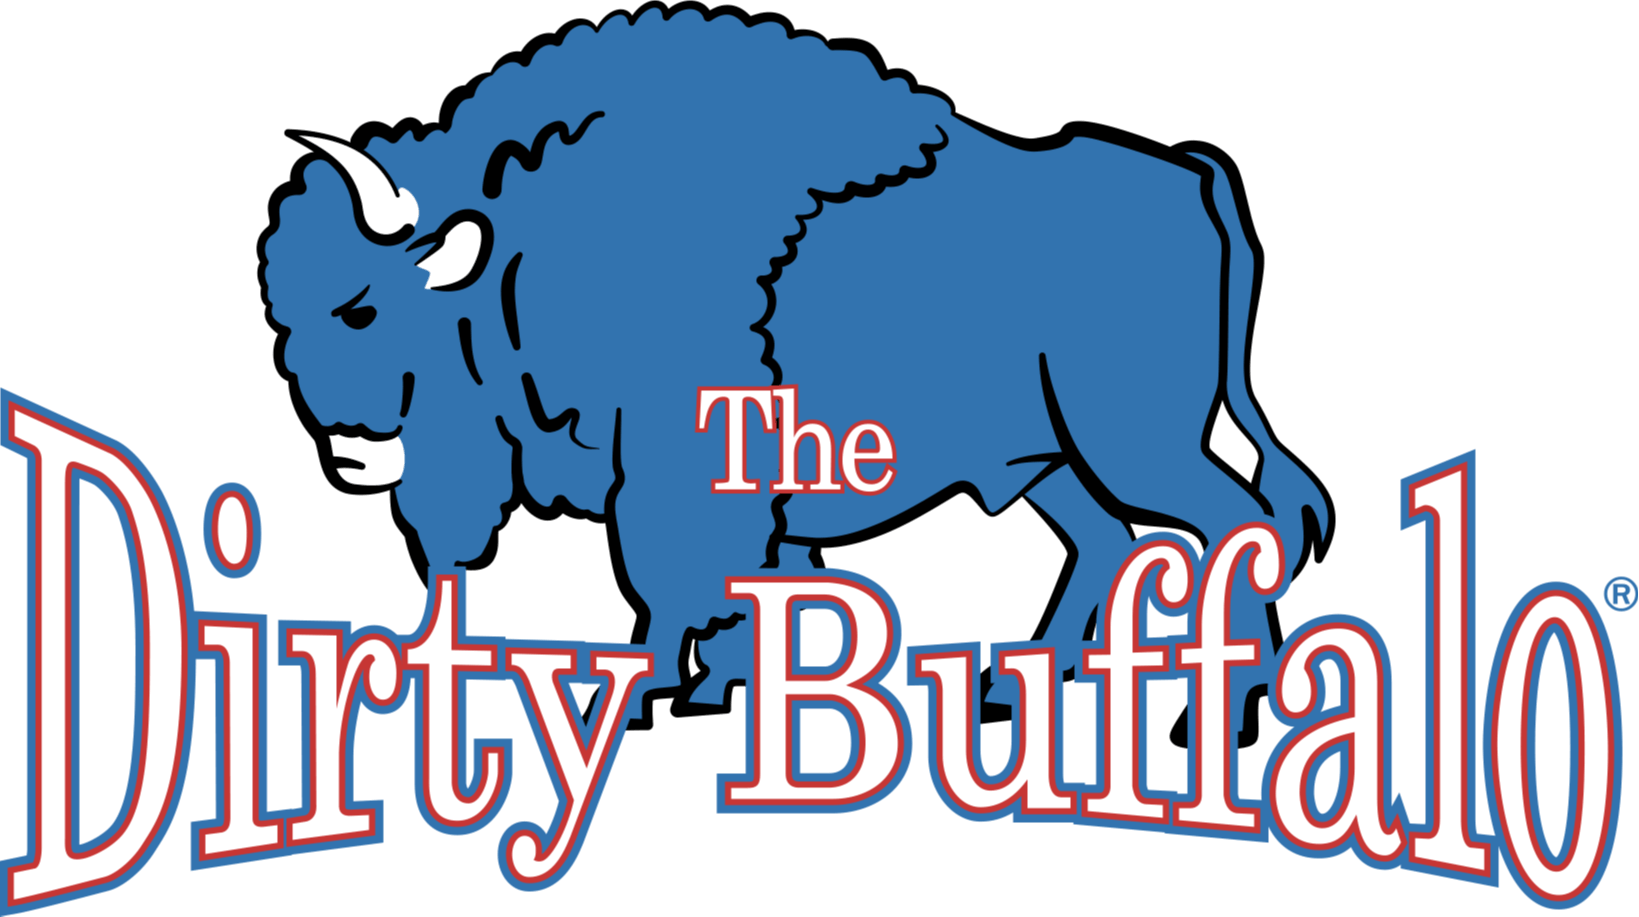 The Dirty Buffalo - Little Creek